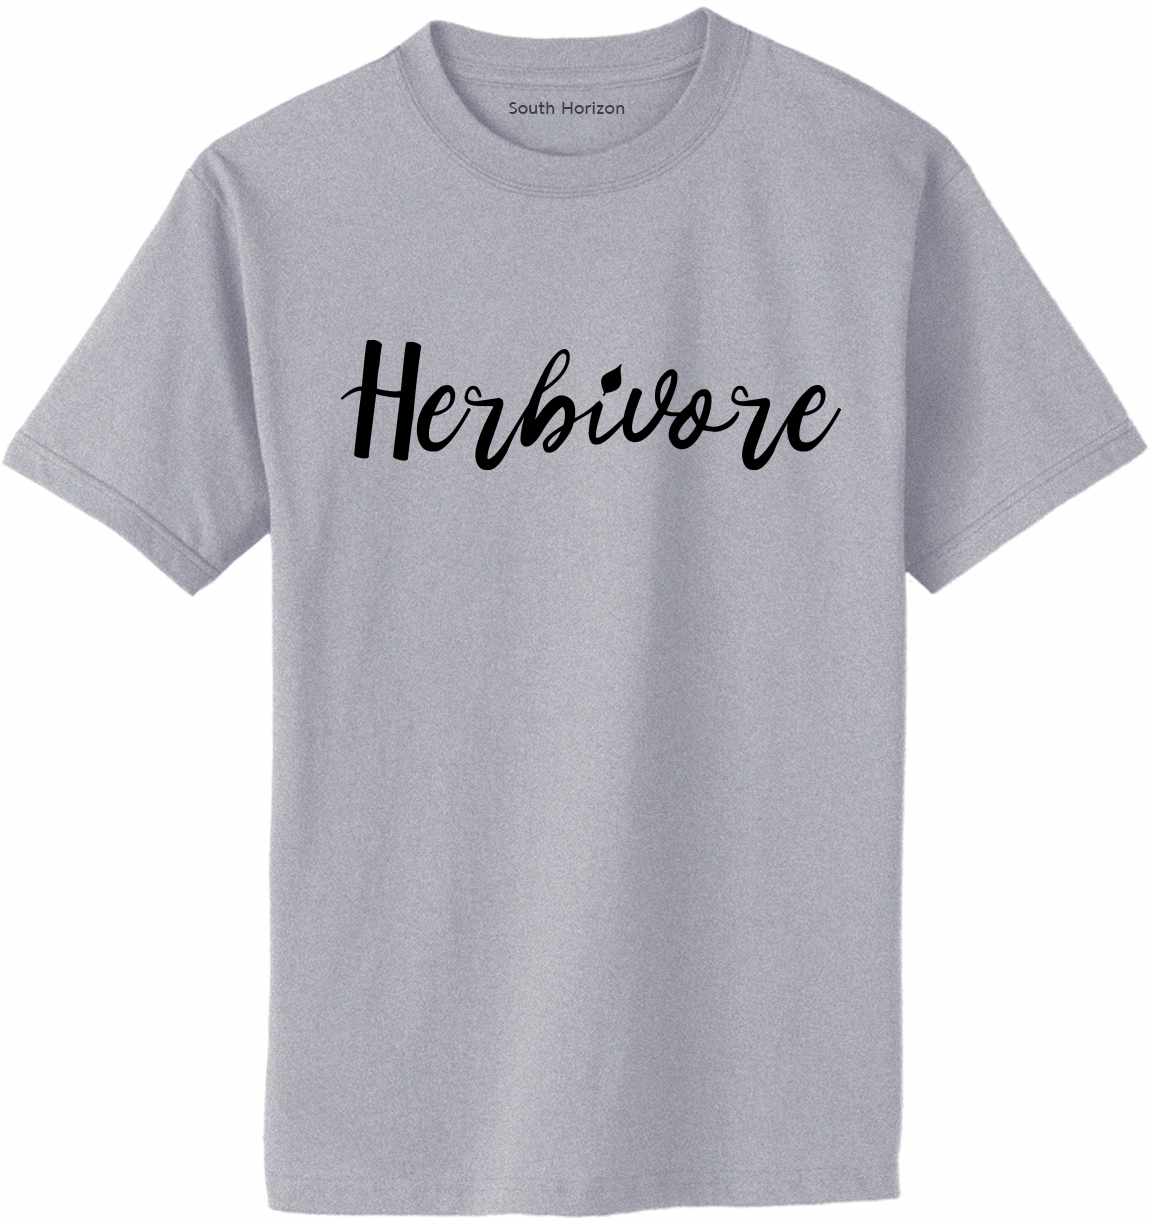 Herbivore Adult T-Shirt (#979-1)